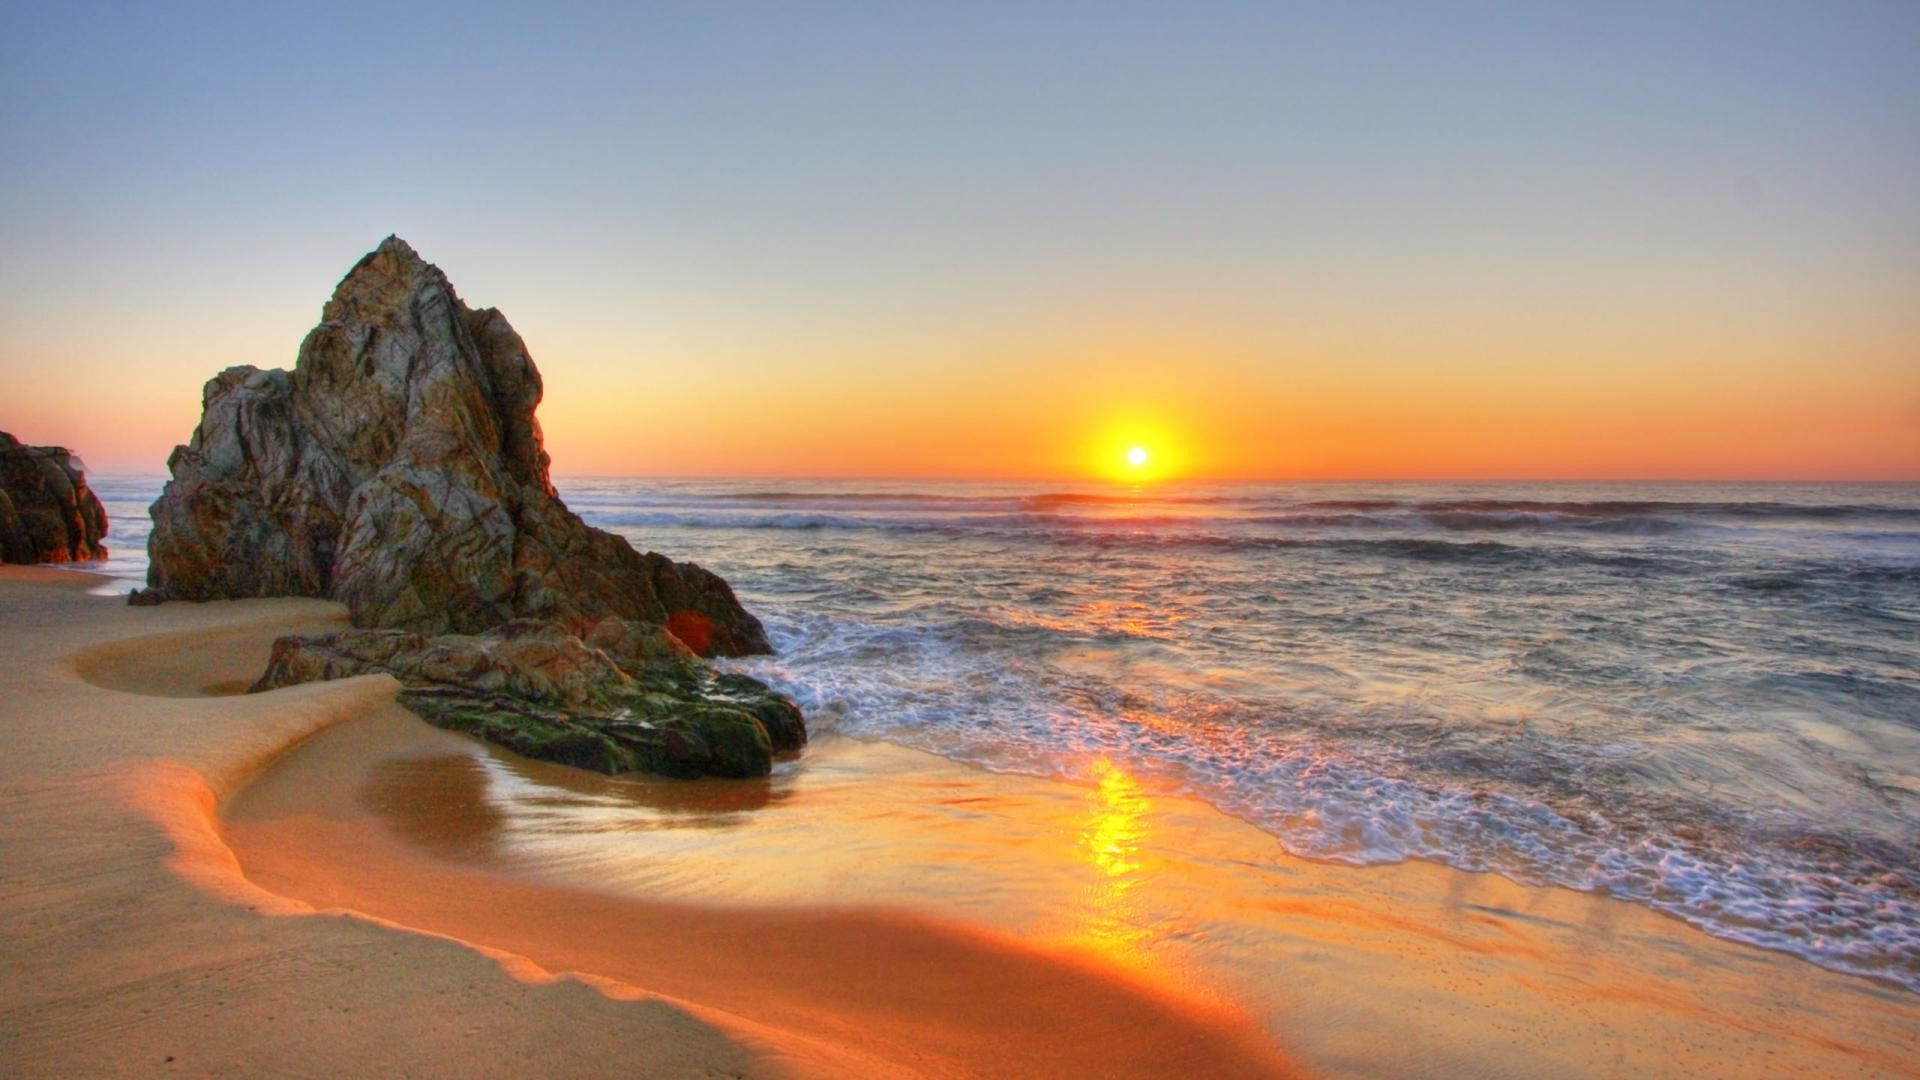 Beach Sunset Background Wallpaper Download High Resolution 4k